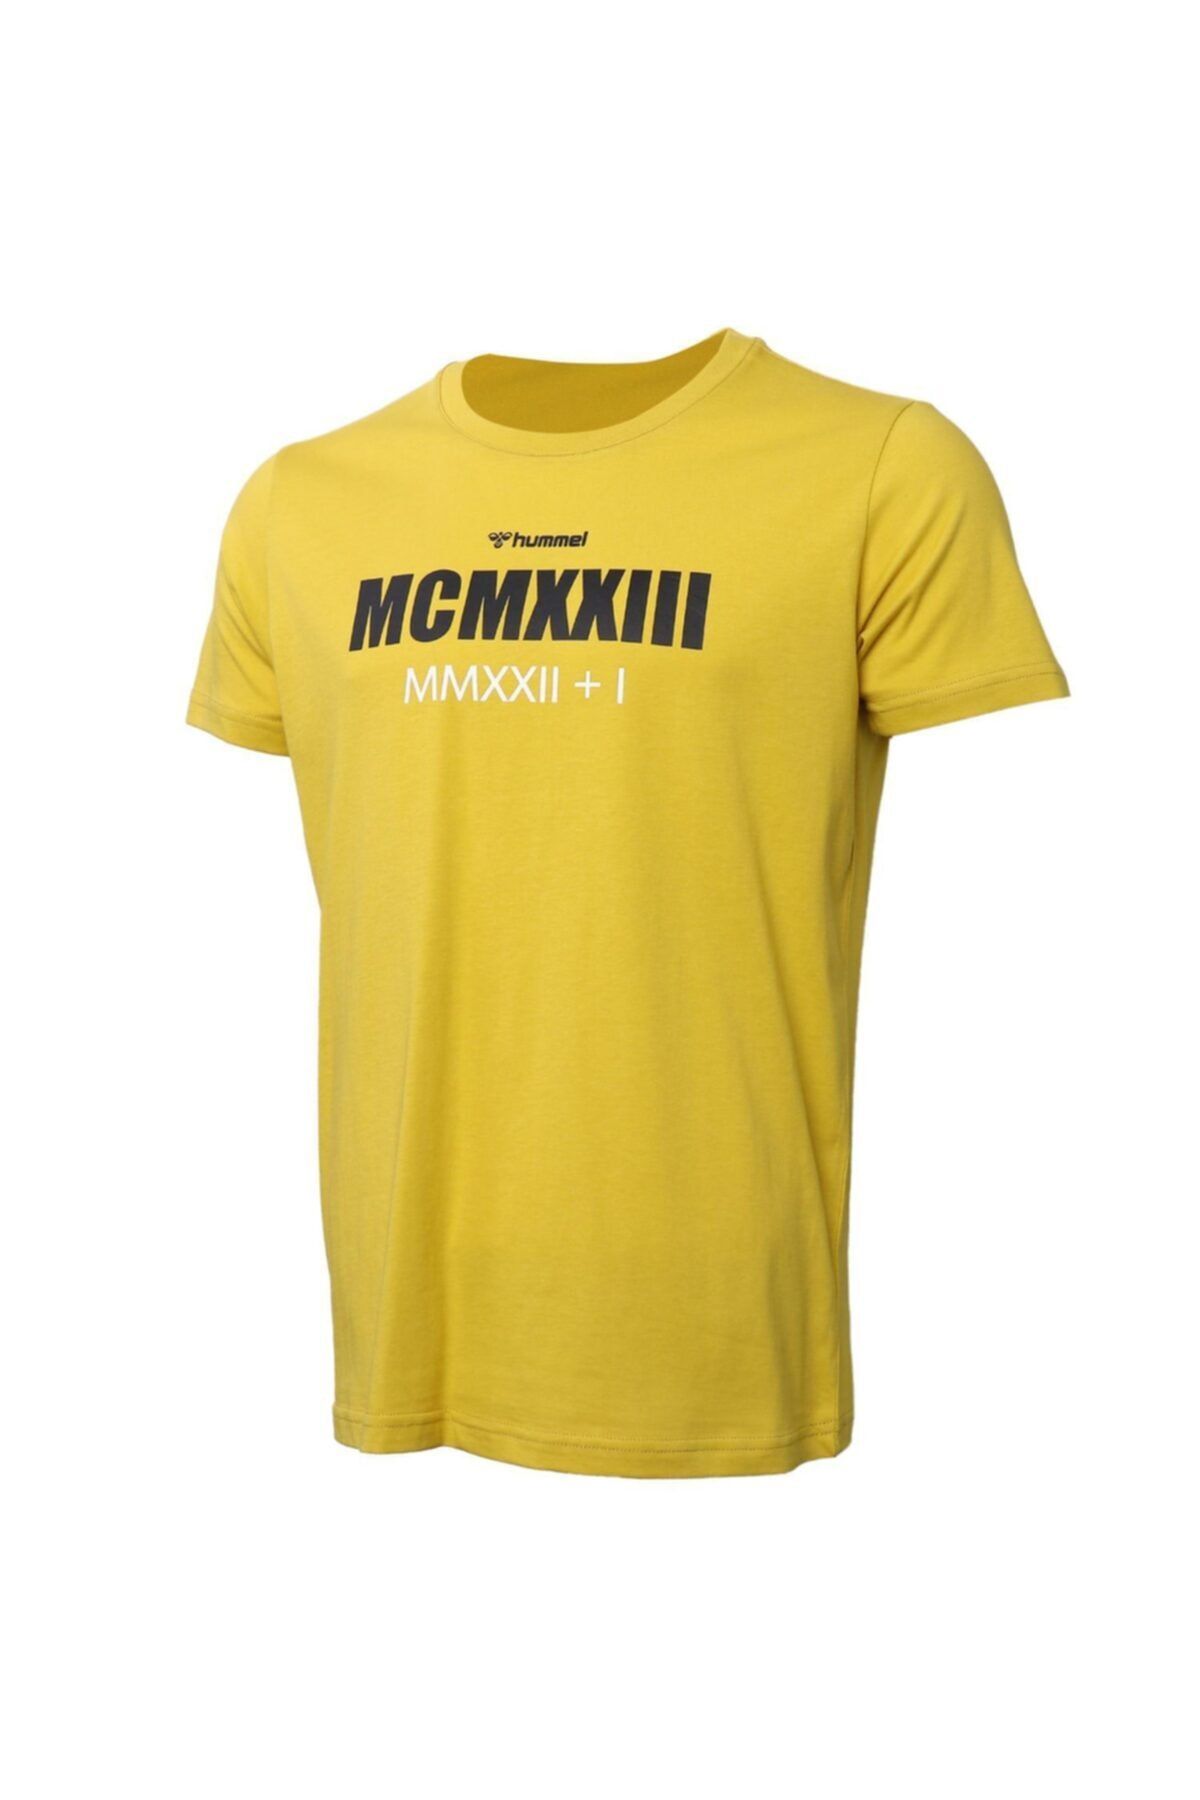 hummel Erkek Sarı Spor T-Shirt